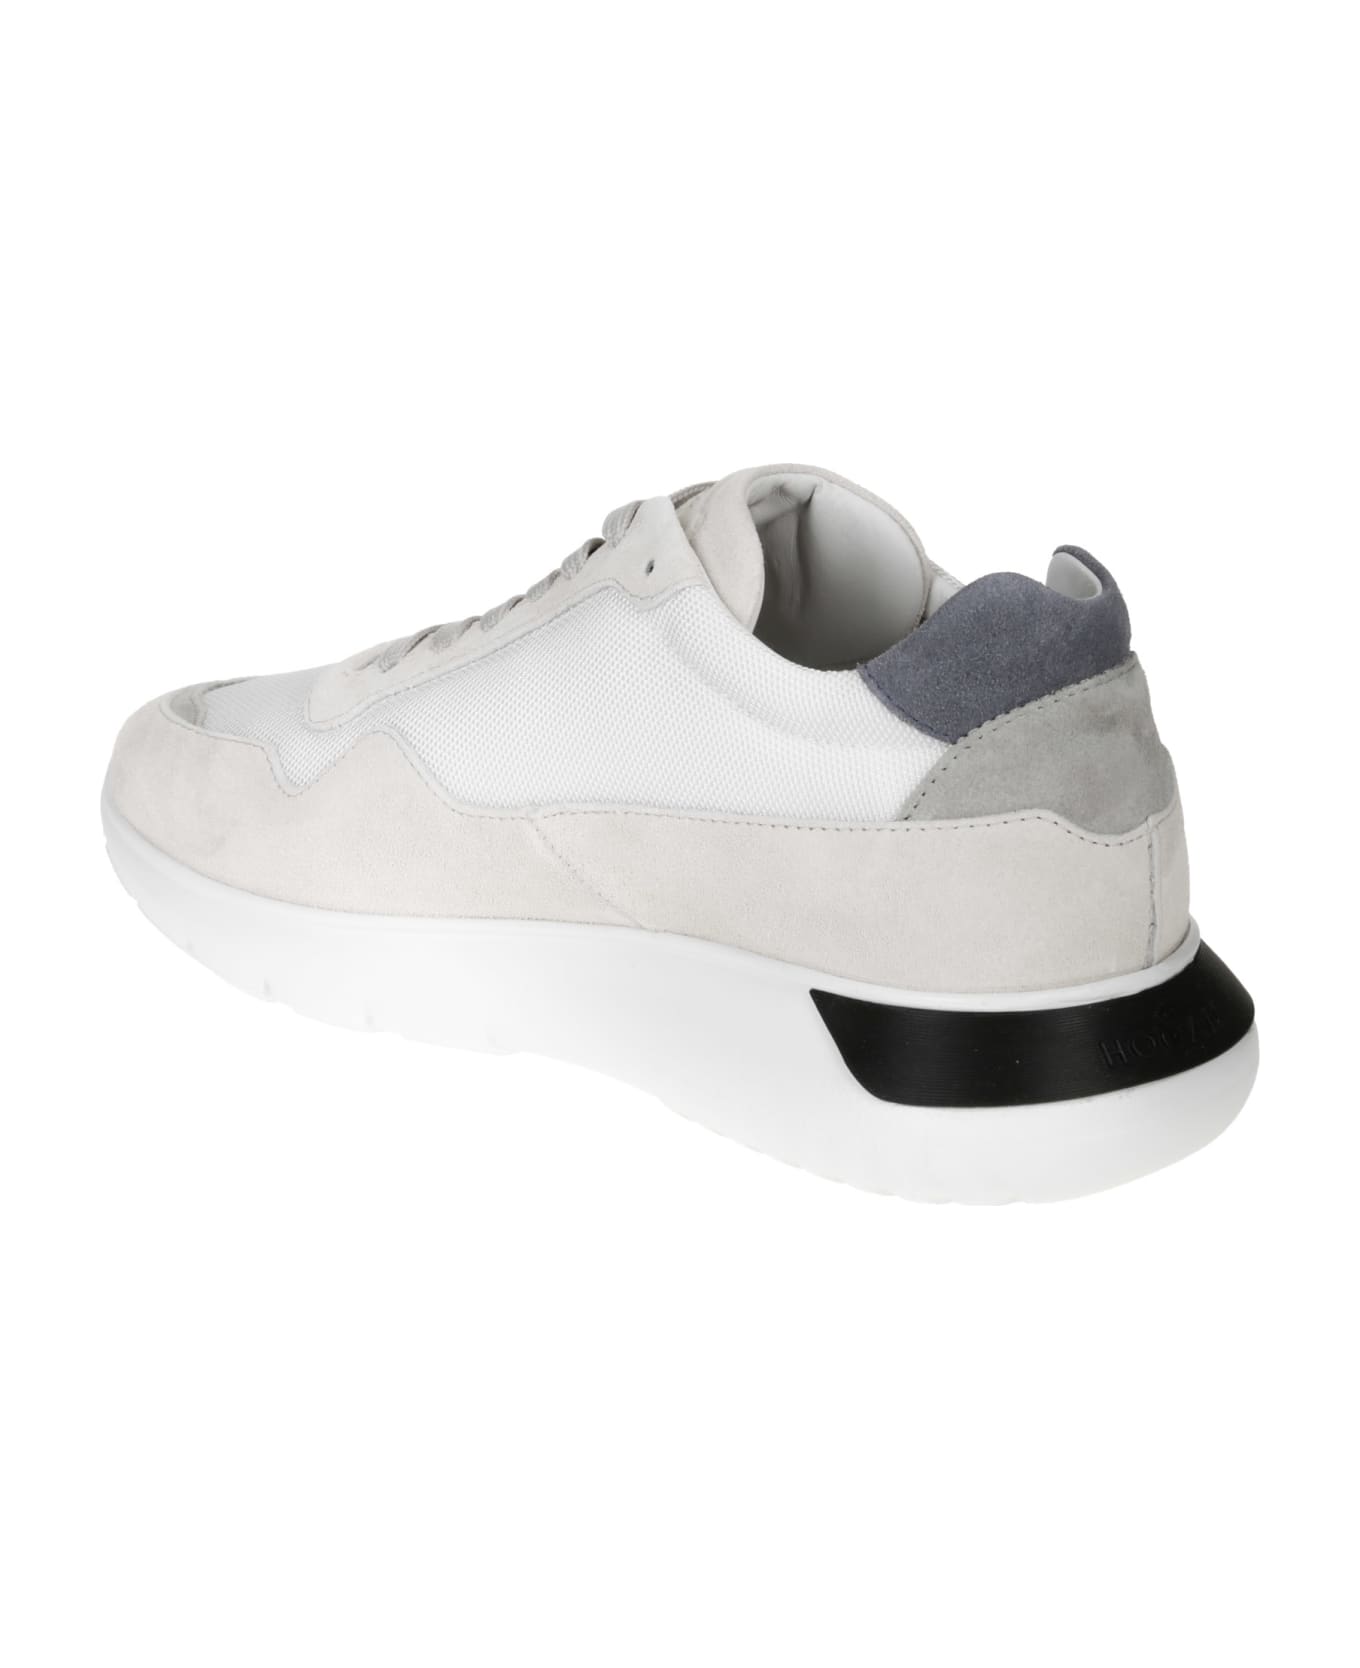 Hogan Interactiv3 Sneakers - White